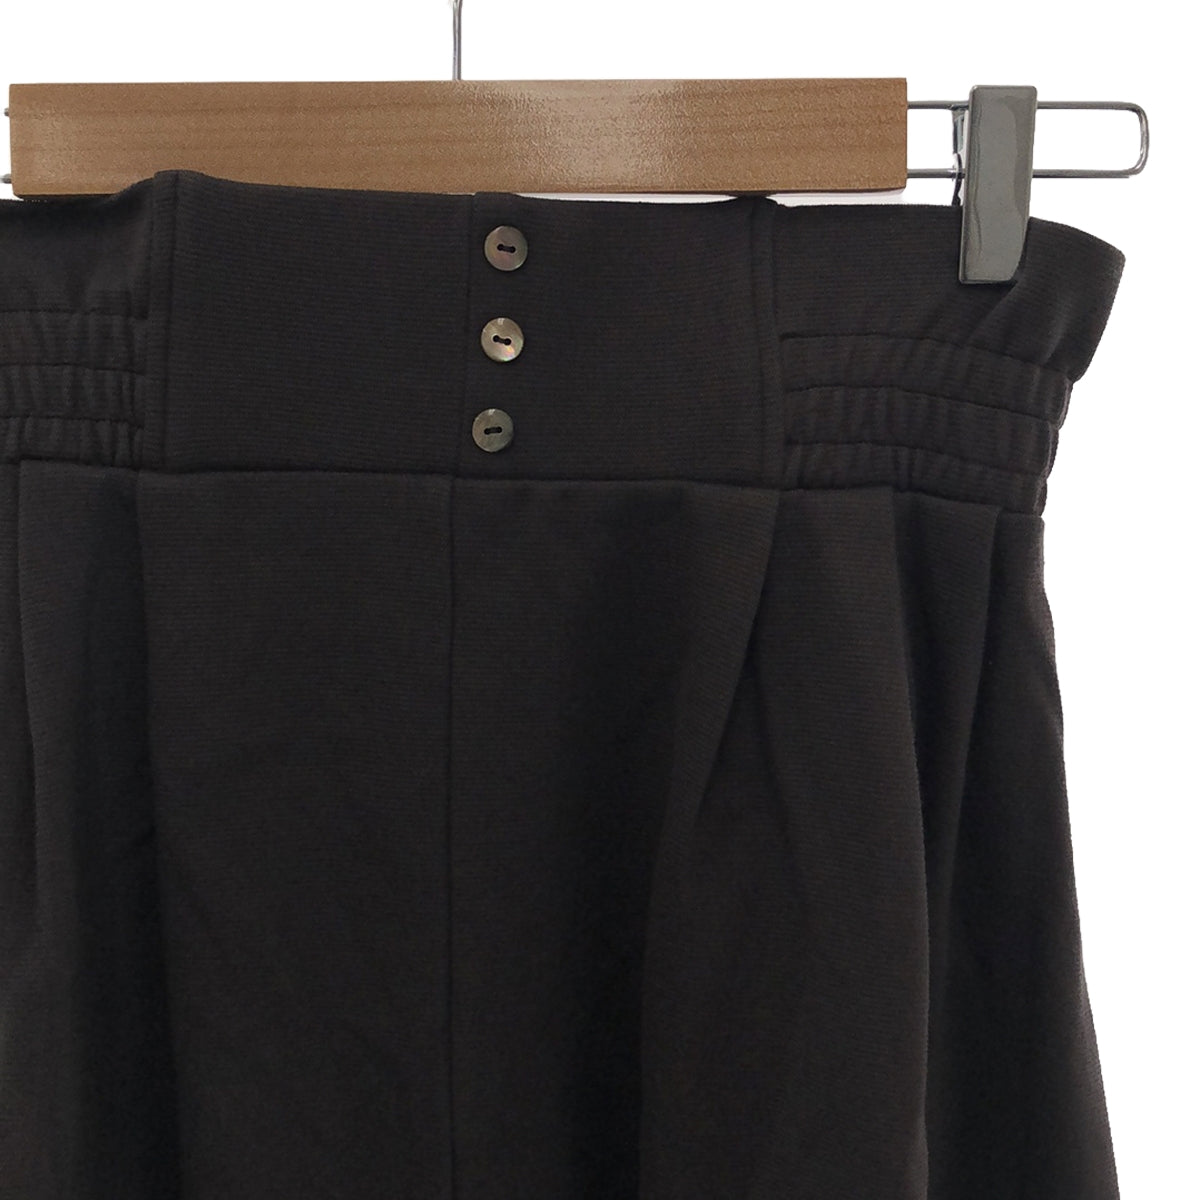 foufou / フーフー | easy classical skirt イージークラシカルスカート | 小豆色 | レディース